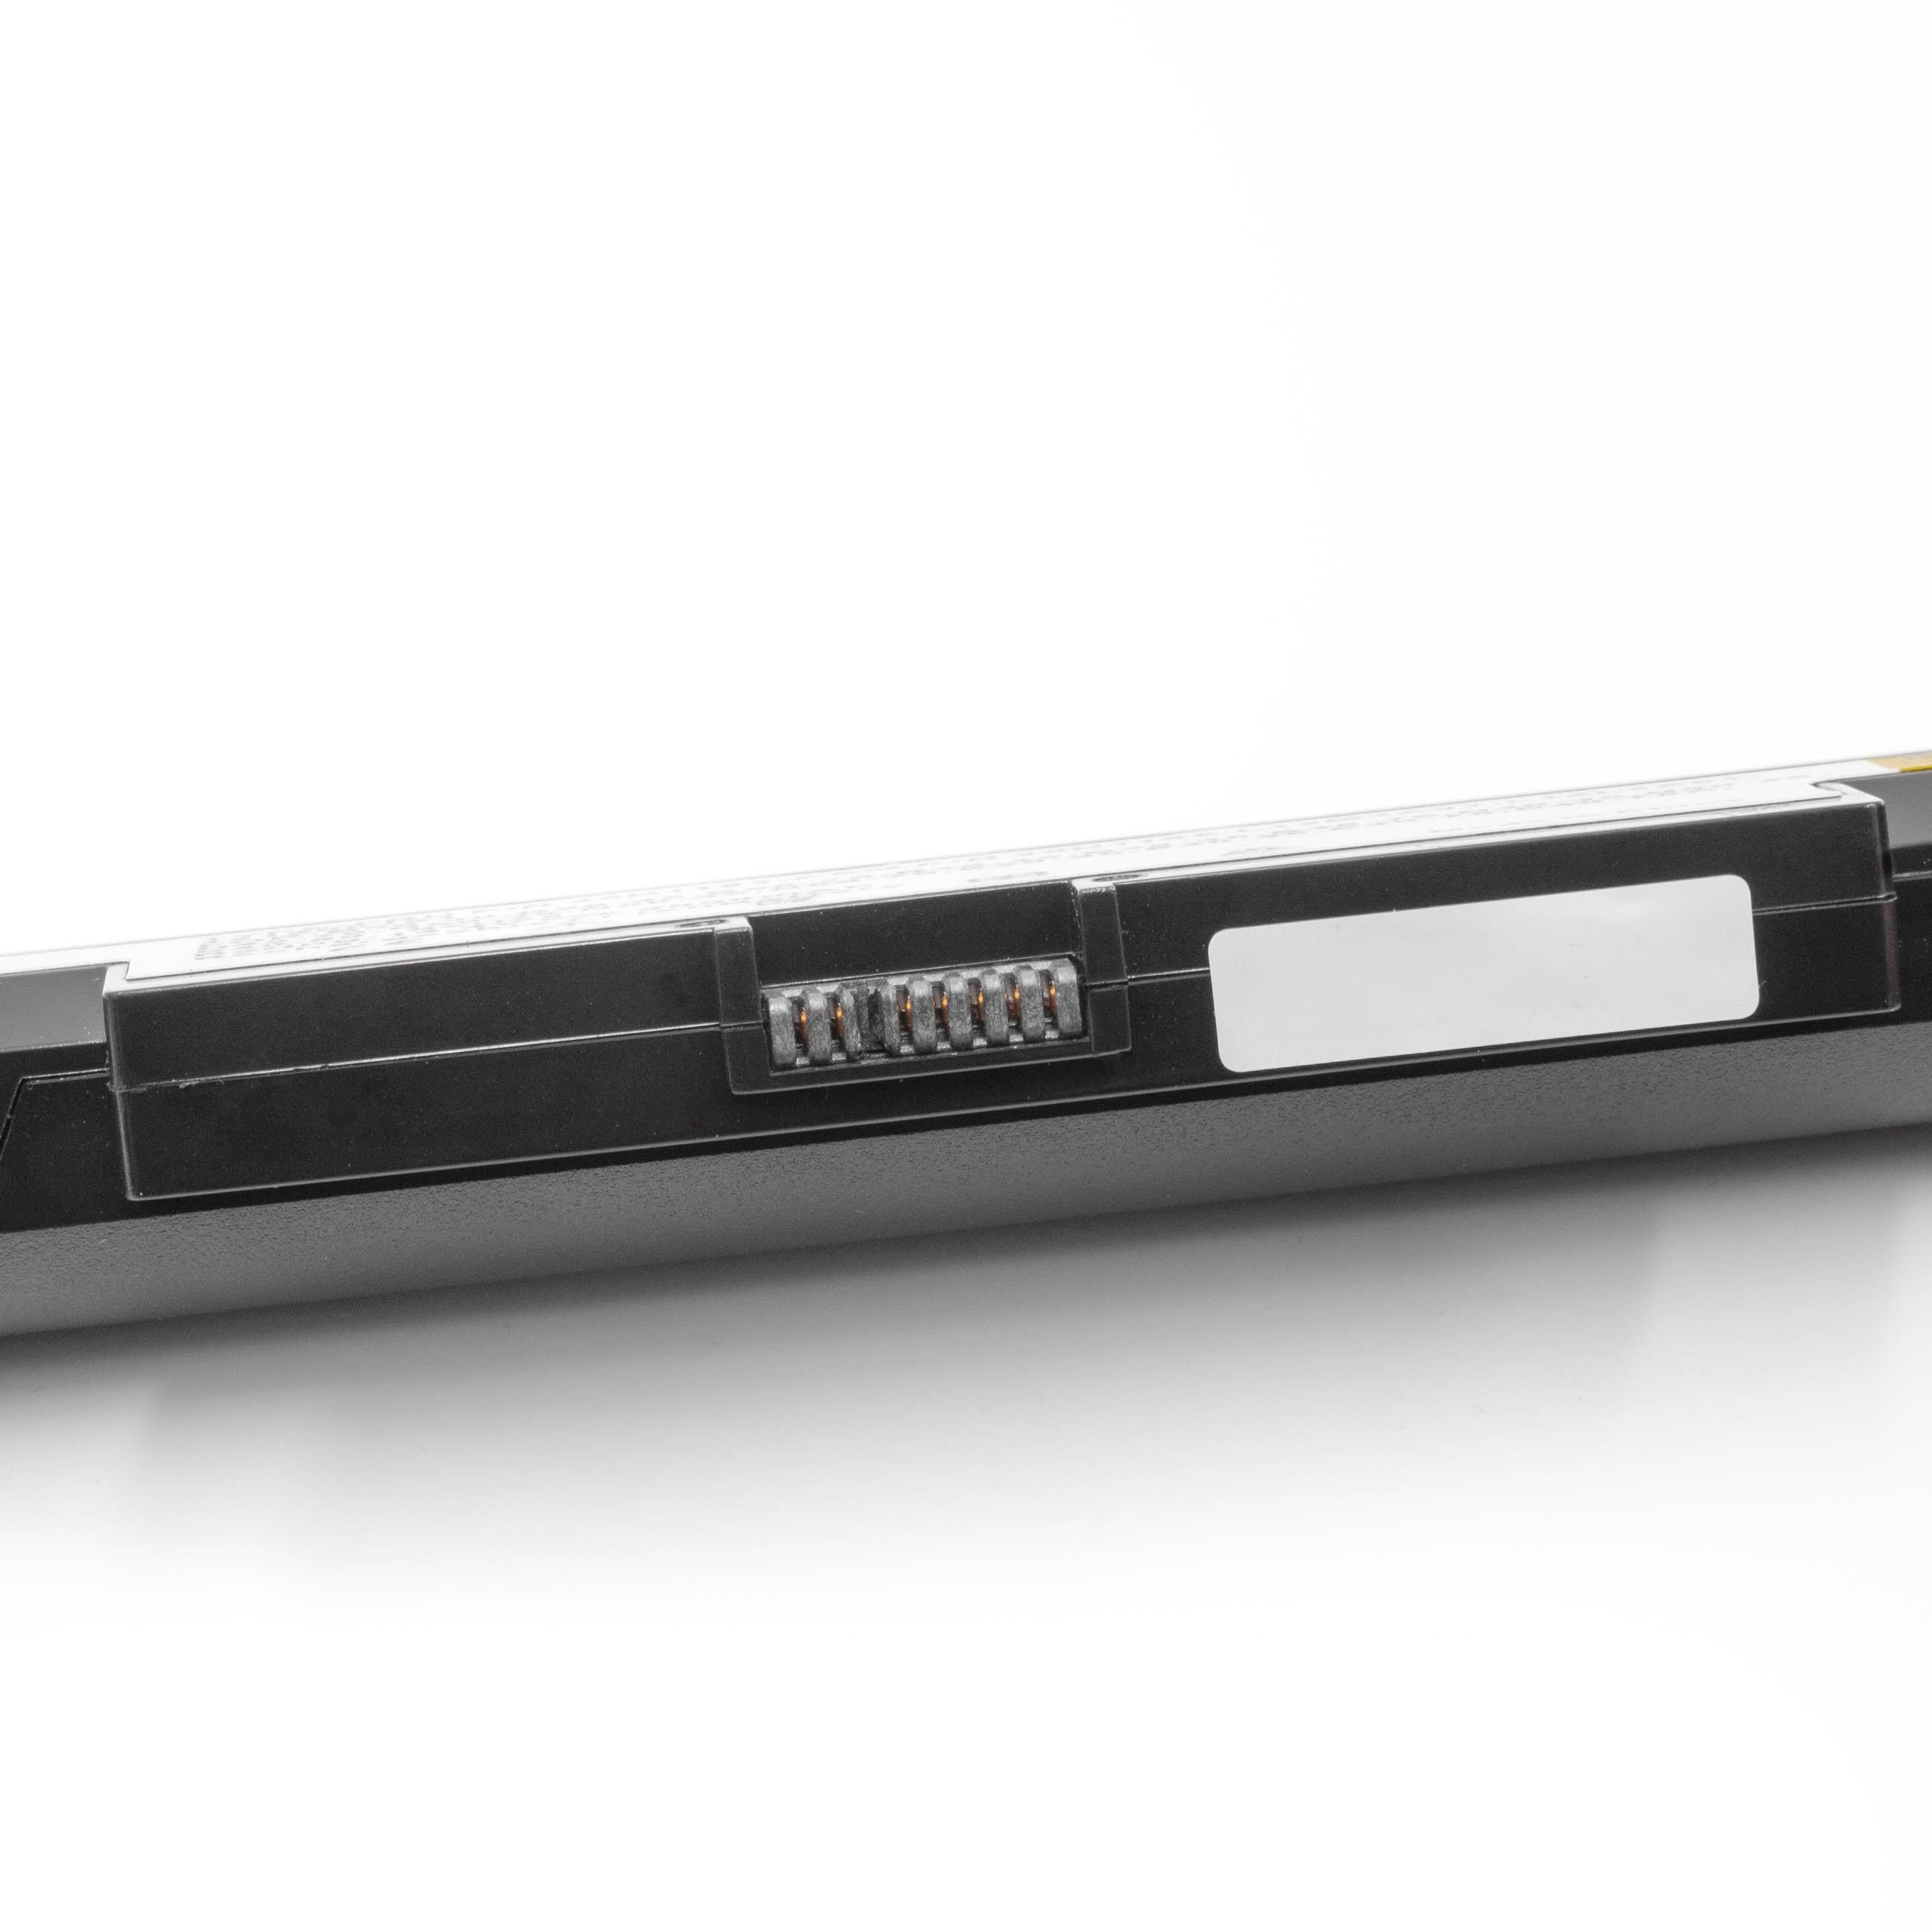 vhbw passend für Lenovo Eraser N40, 2600 mAh N40-30, M4450A, M4400A, N40-45, M4450, Laptop-Akku